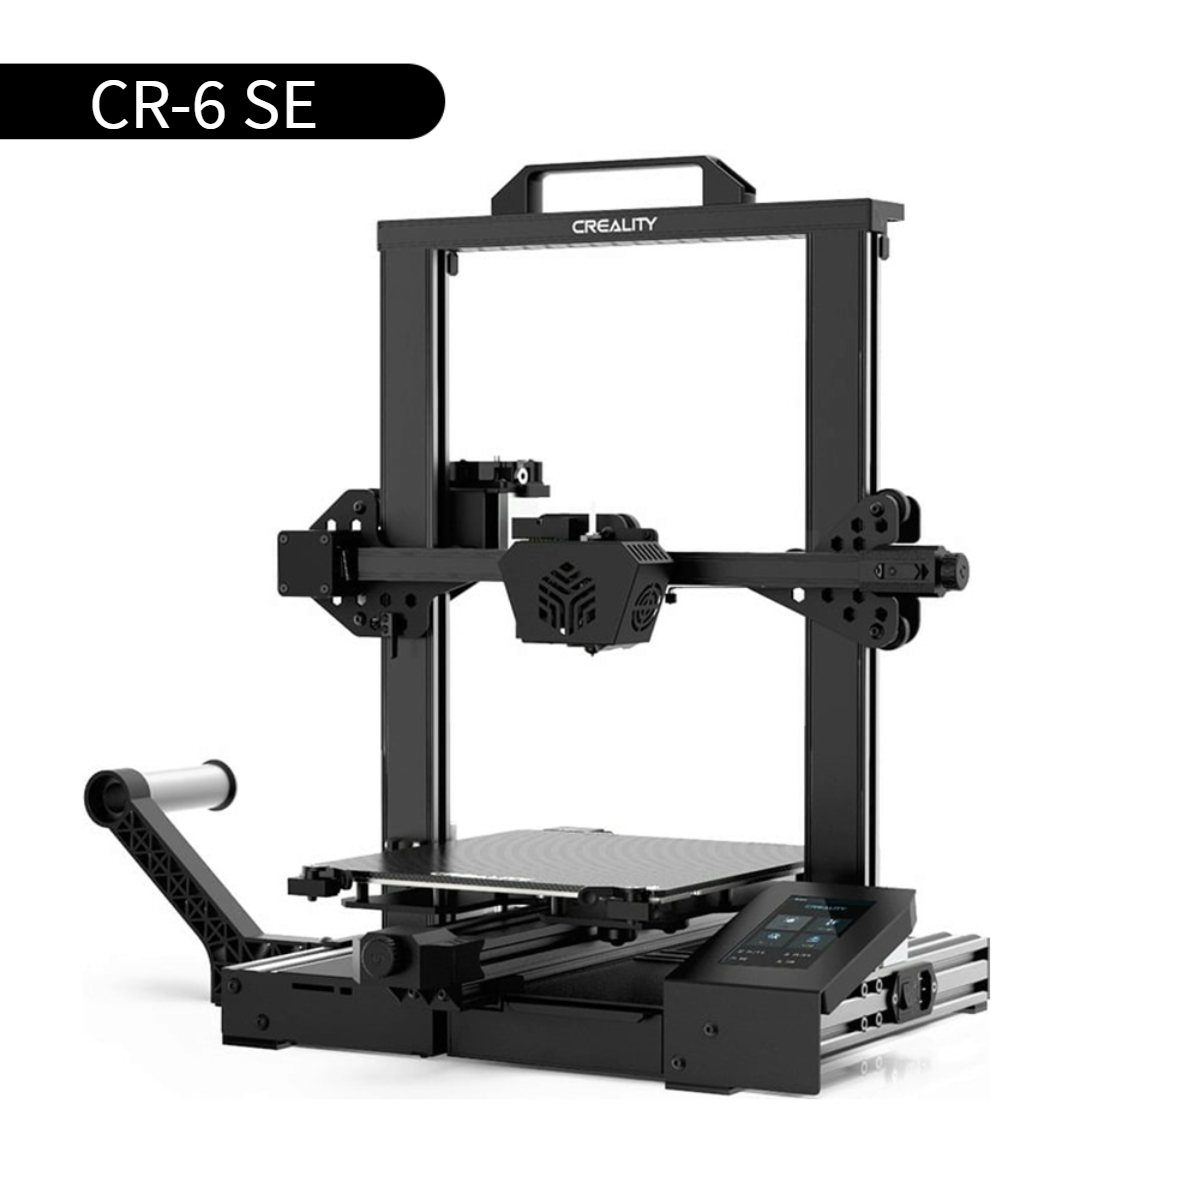 creality cr-6 se, auto leveling 3d printer